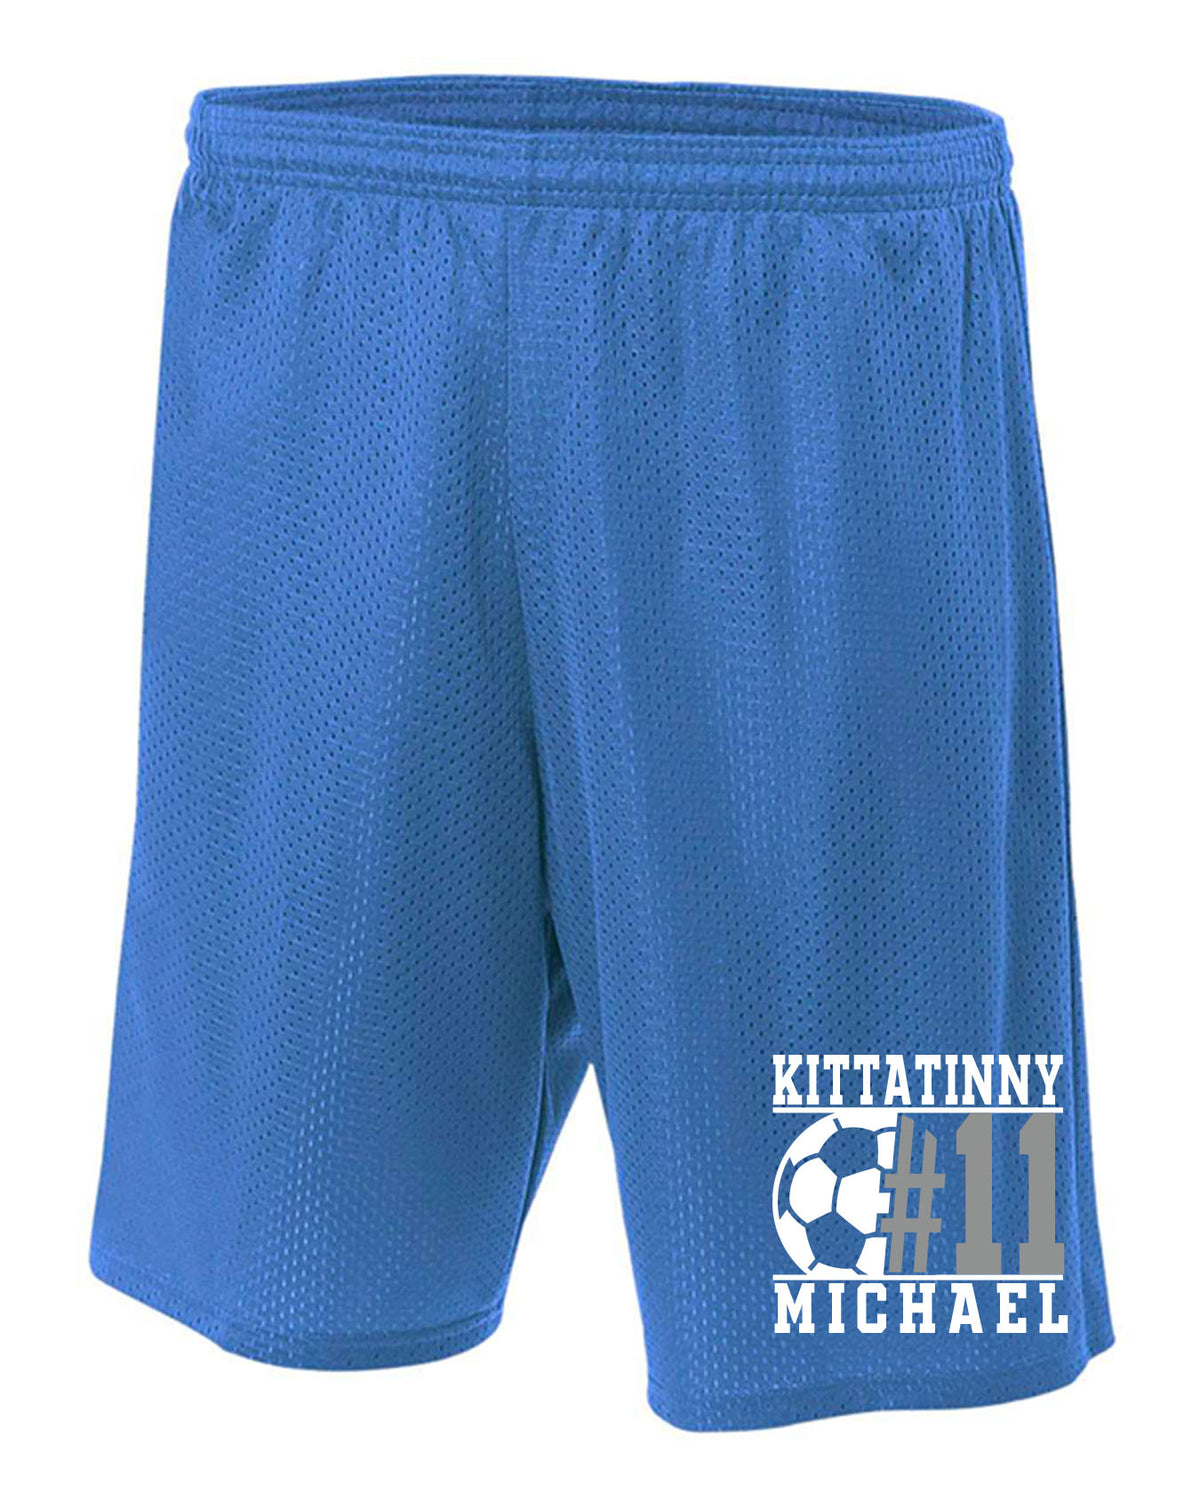 Kittatinny Soccer Design 5 Mesh Shorts